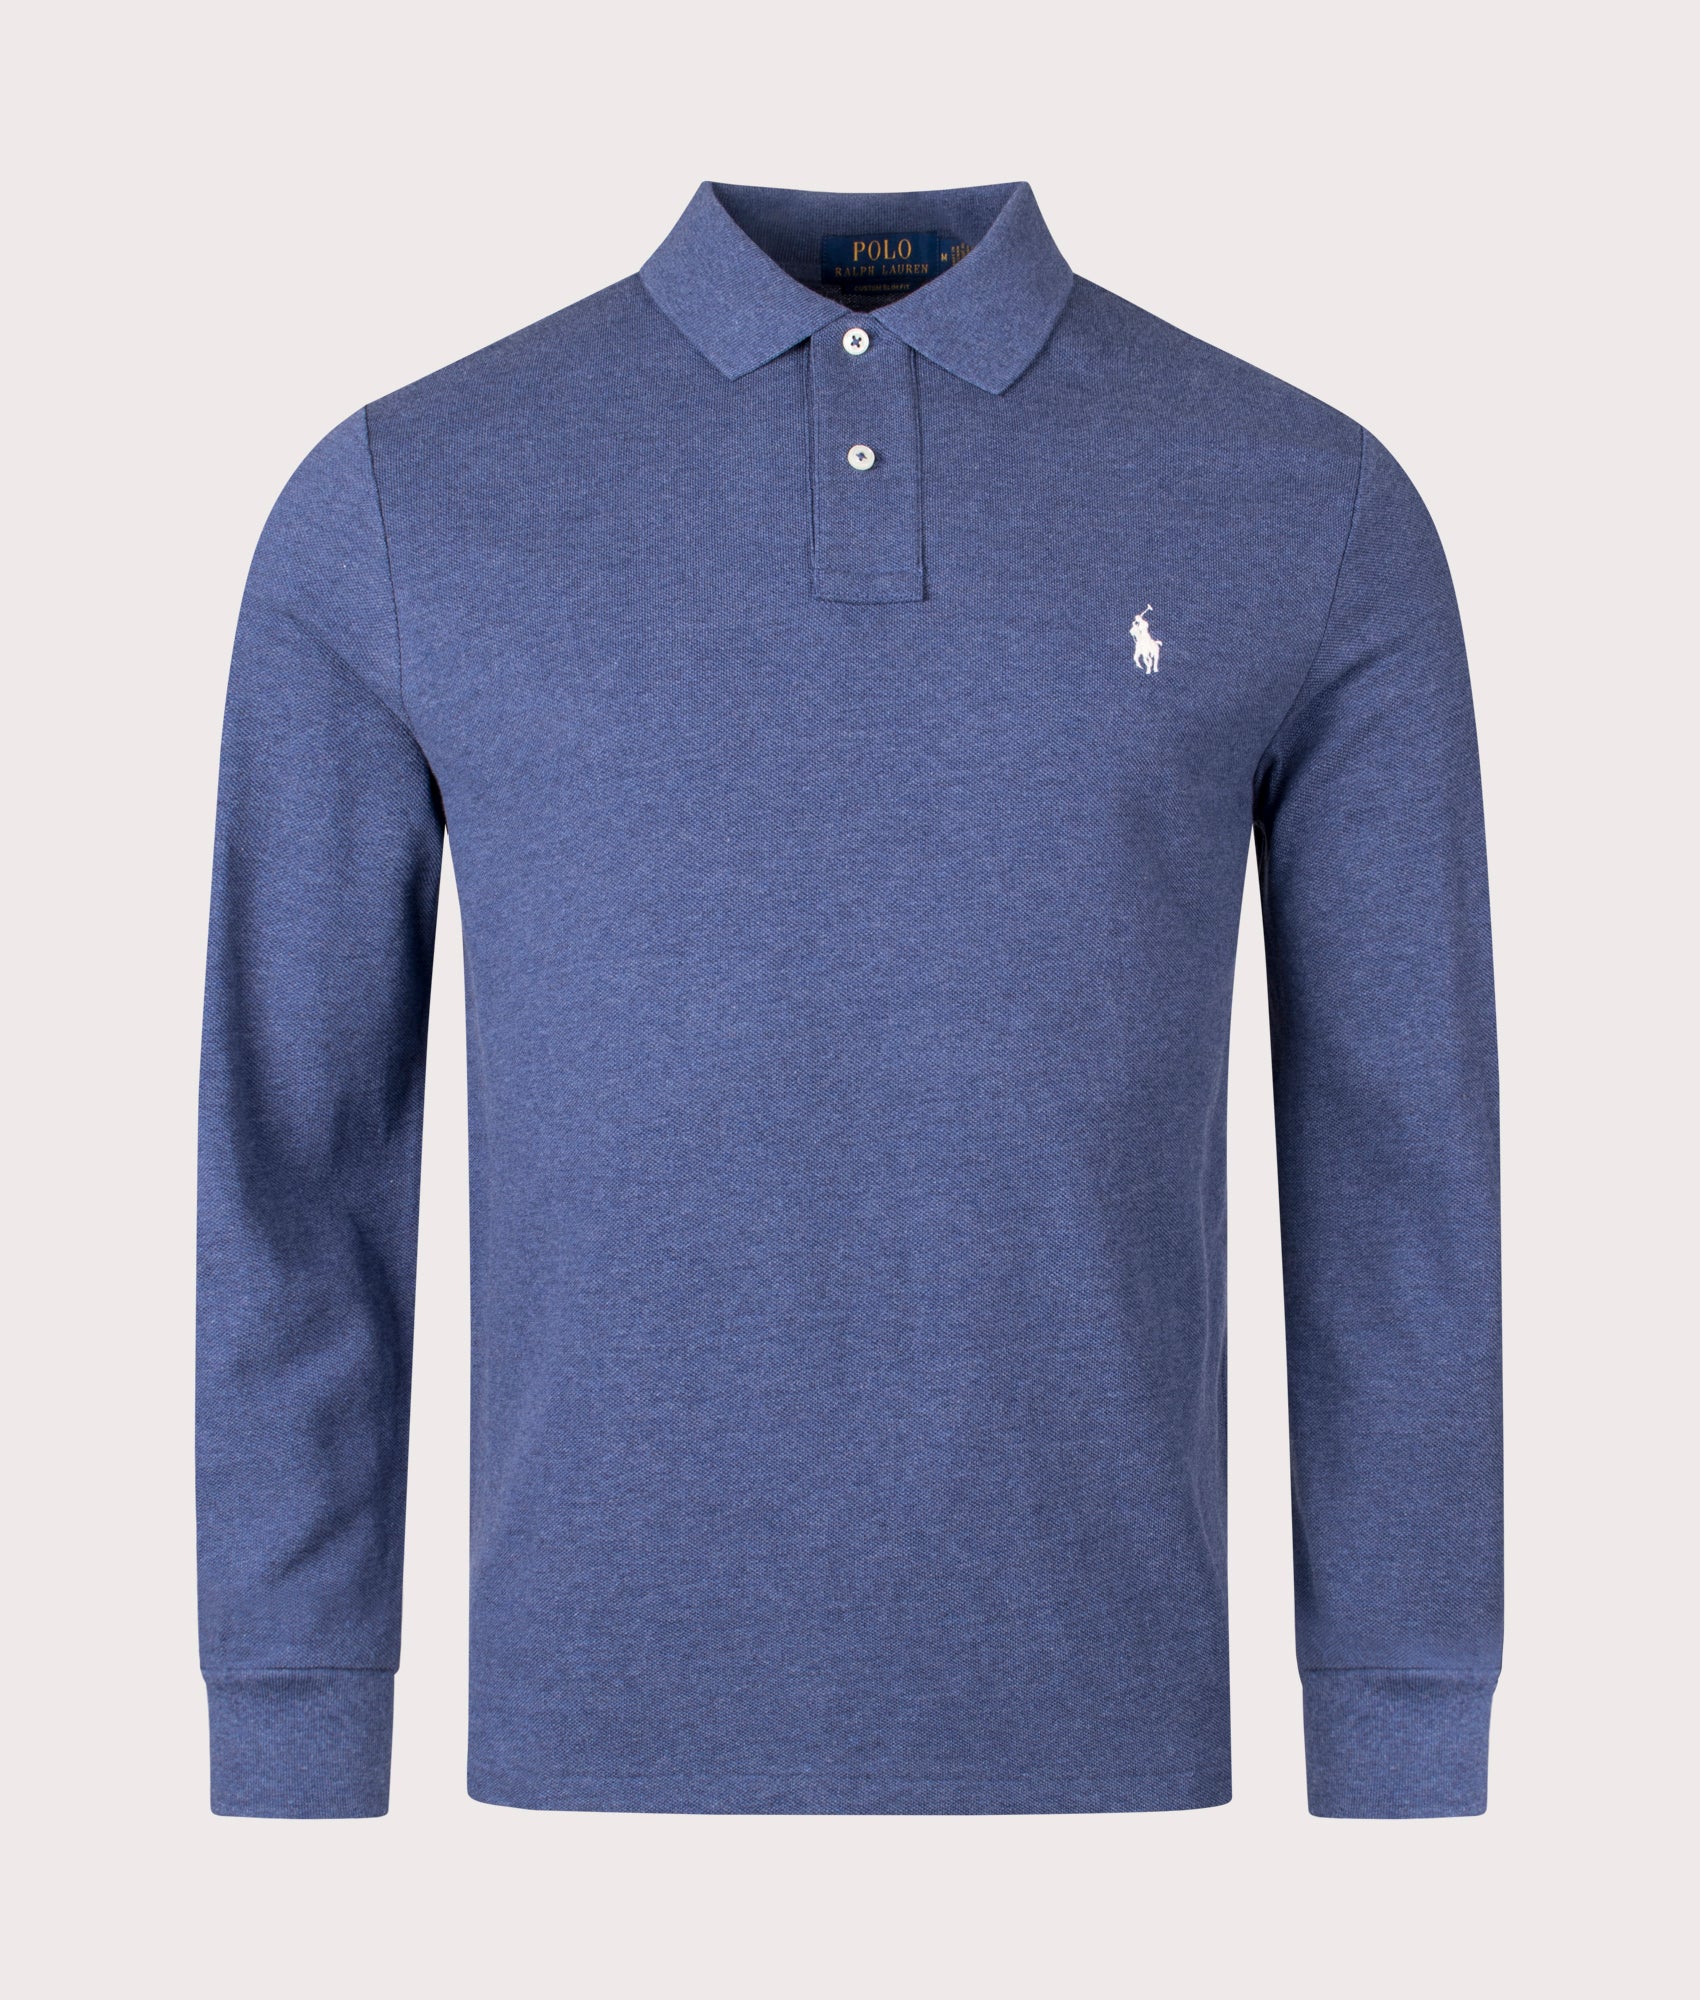 Polo Ralph Lauren Mens Custom Slim Fit Long Sleeve Polo Shirt - Colour: 113 Isle Heather - Size: Lar